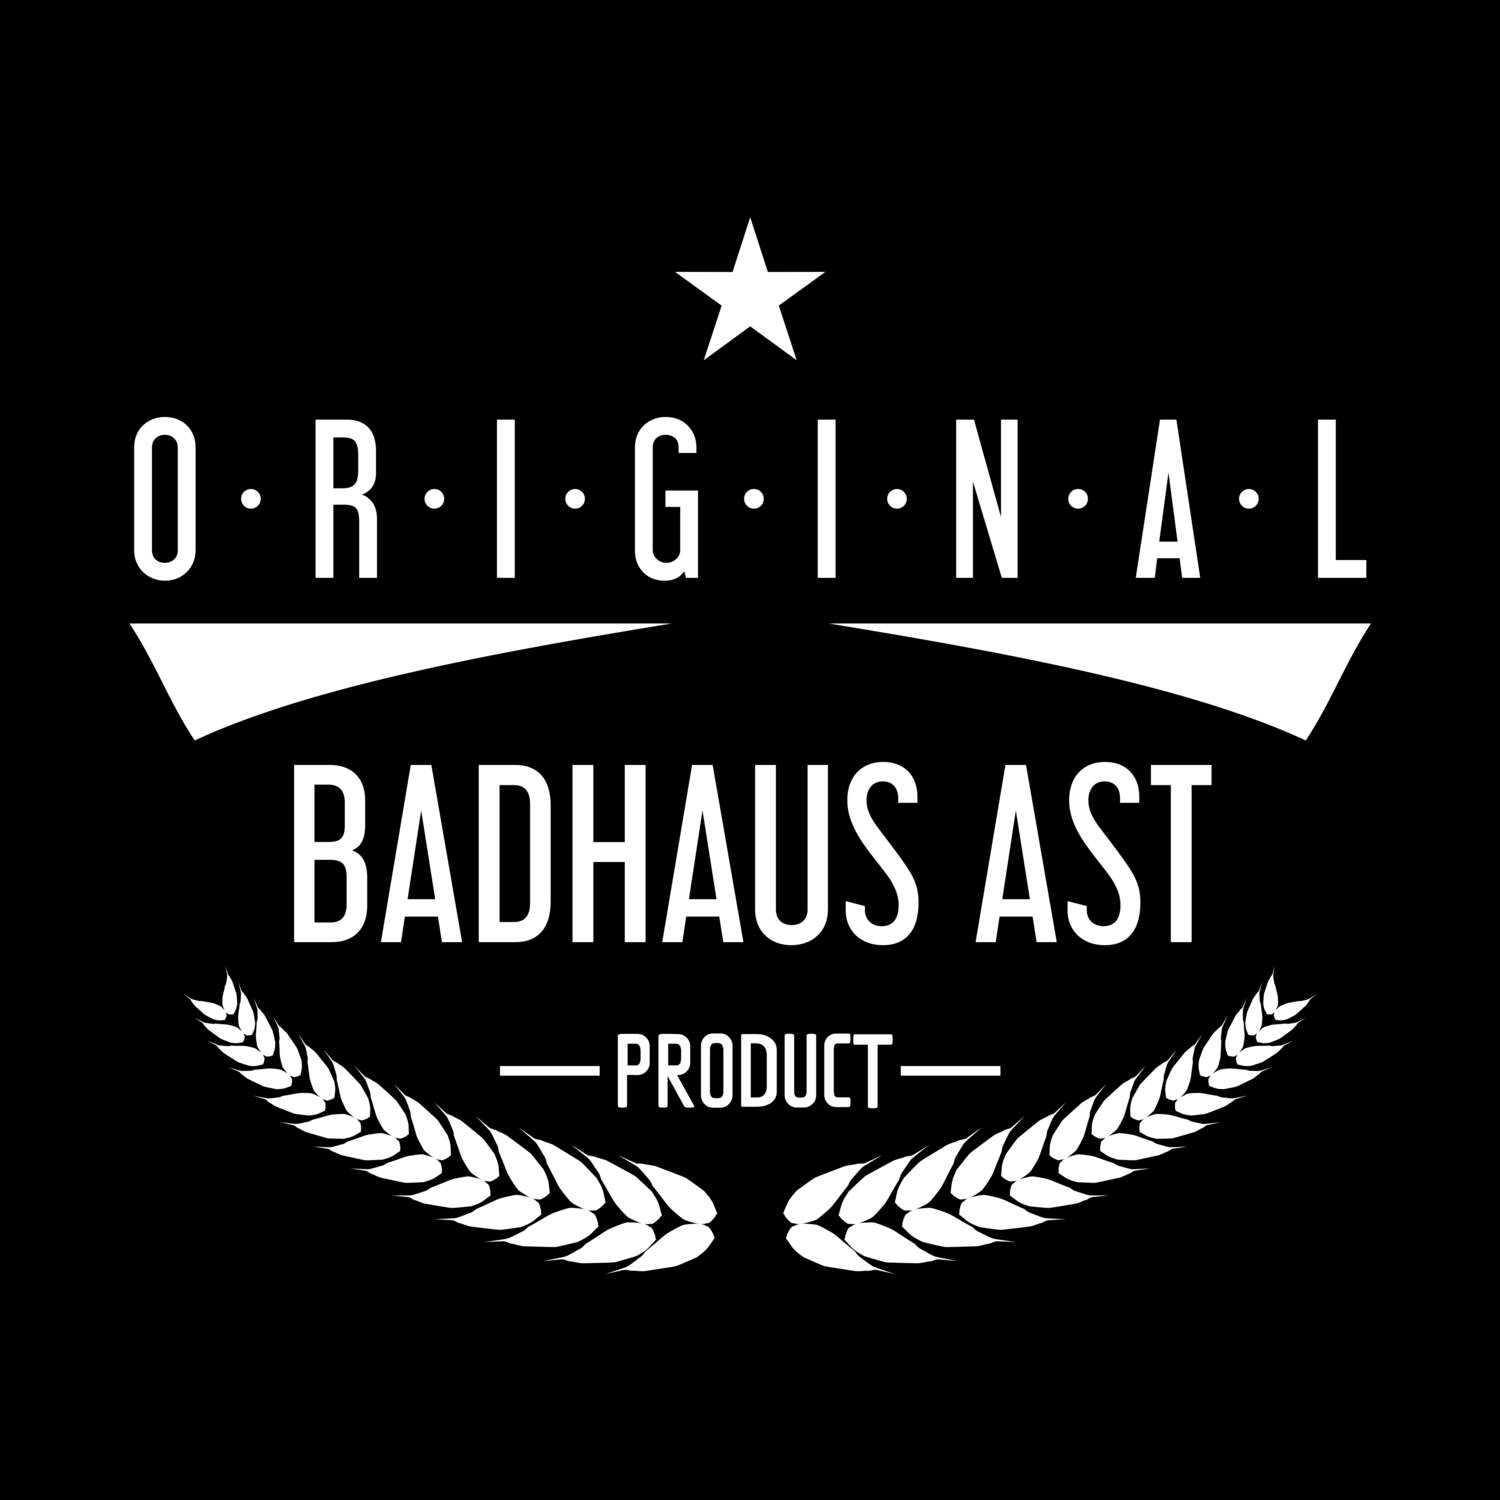 Badhaus Ast T-Shirt »Original Product«